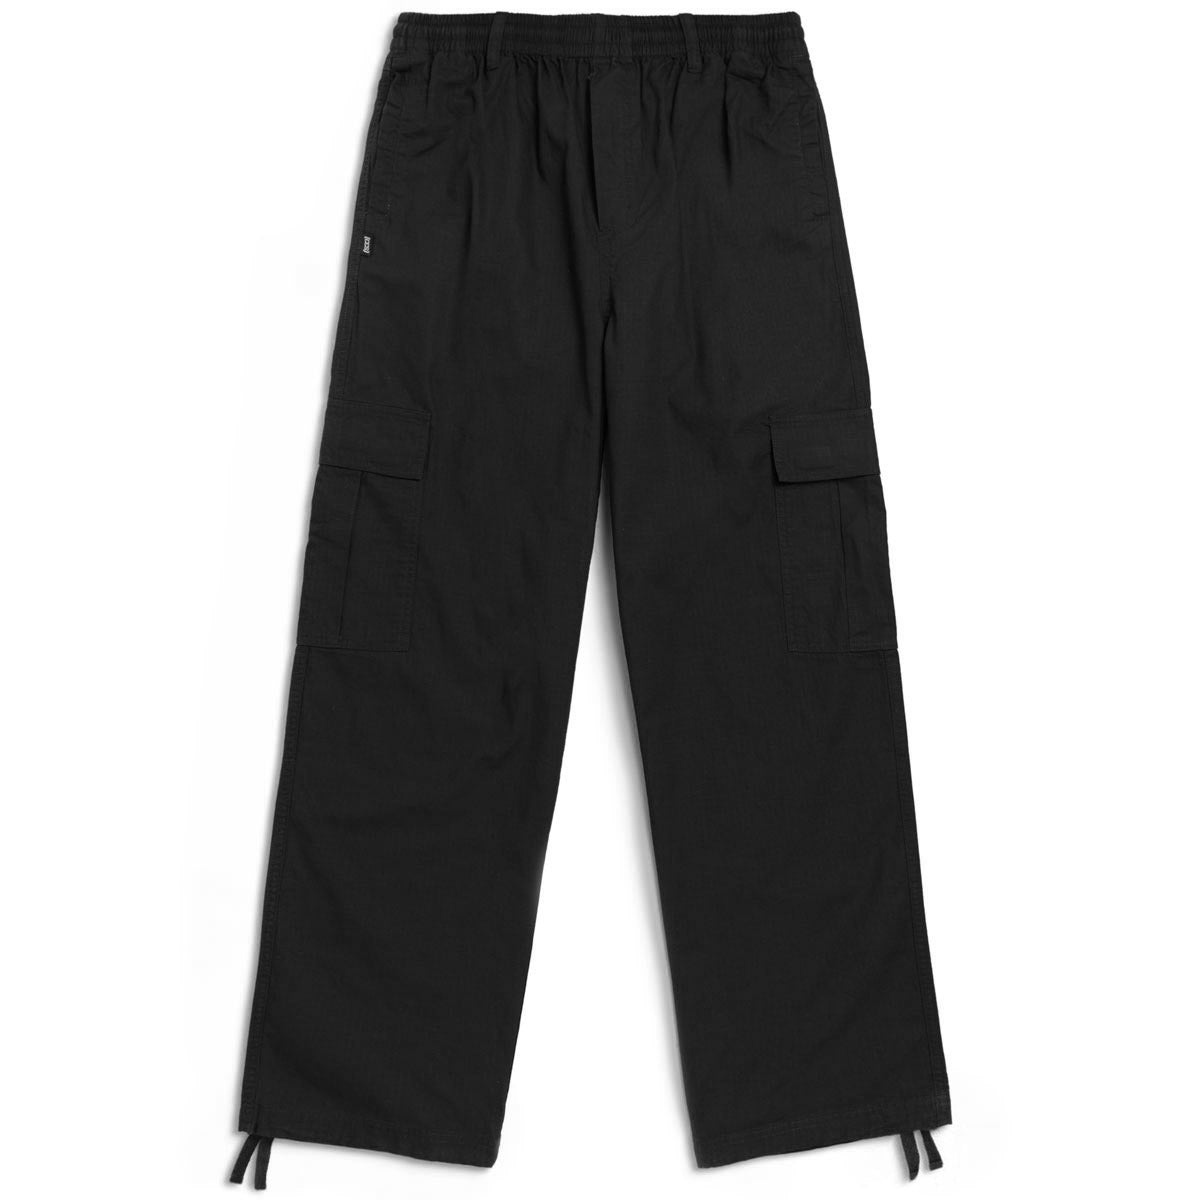 CCS Chandler Ripstop Cargo Pants - Black/Green